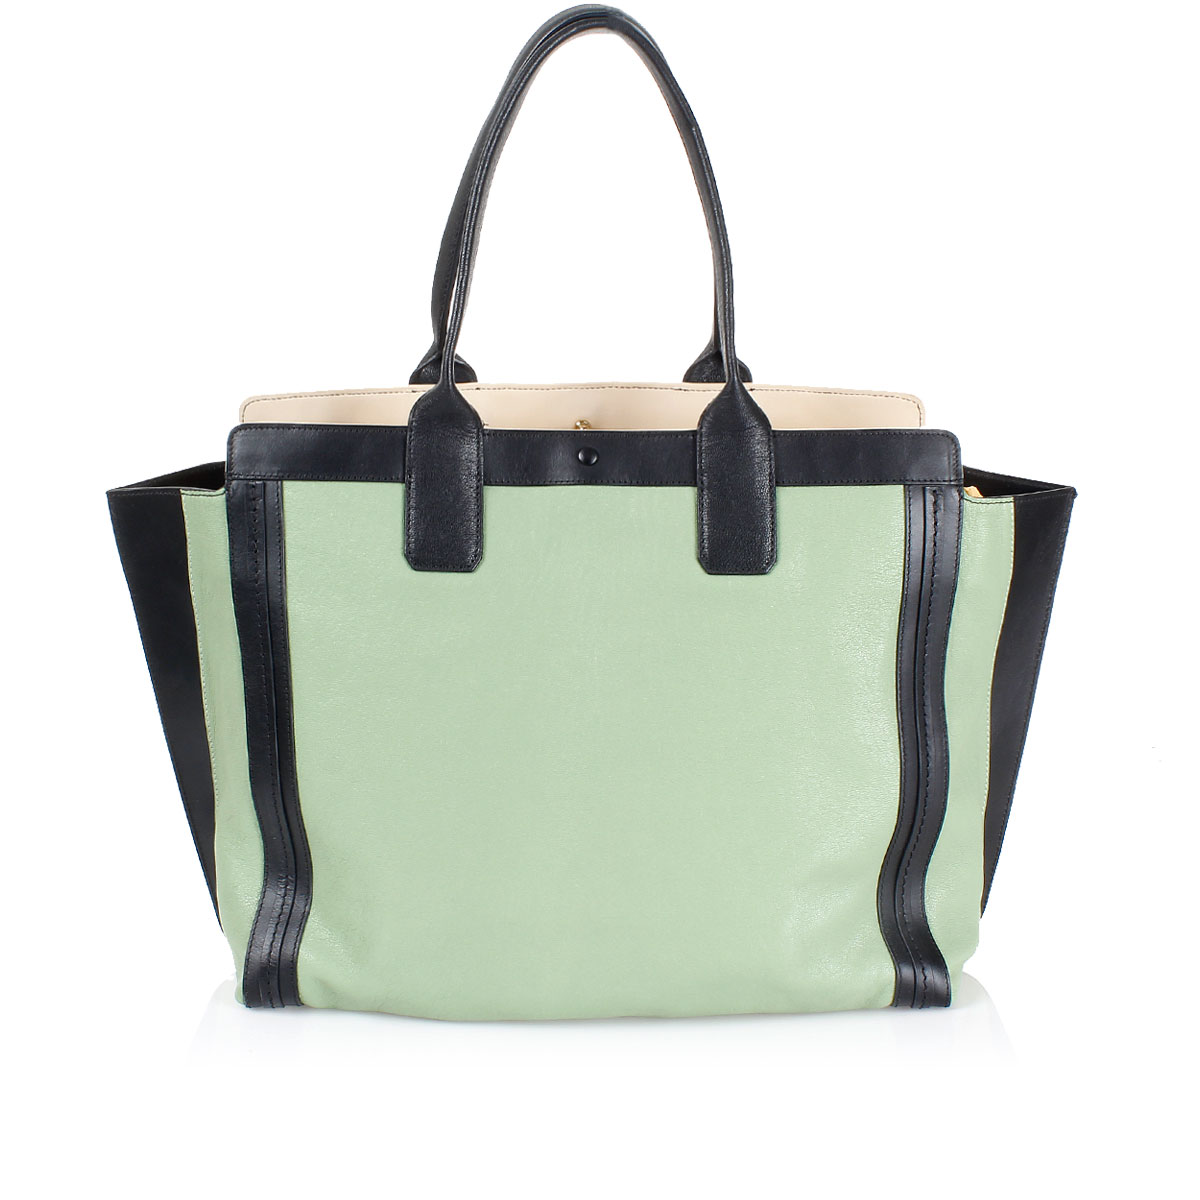 chloe handbags online - Chloe Women Bicolor Leather Shopping Bag - Spence Outlet